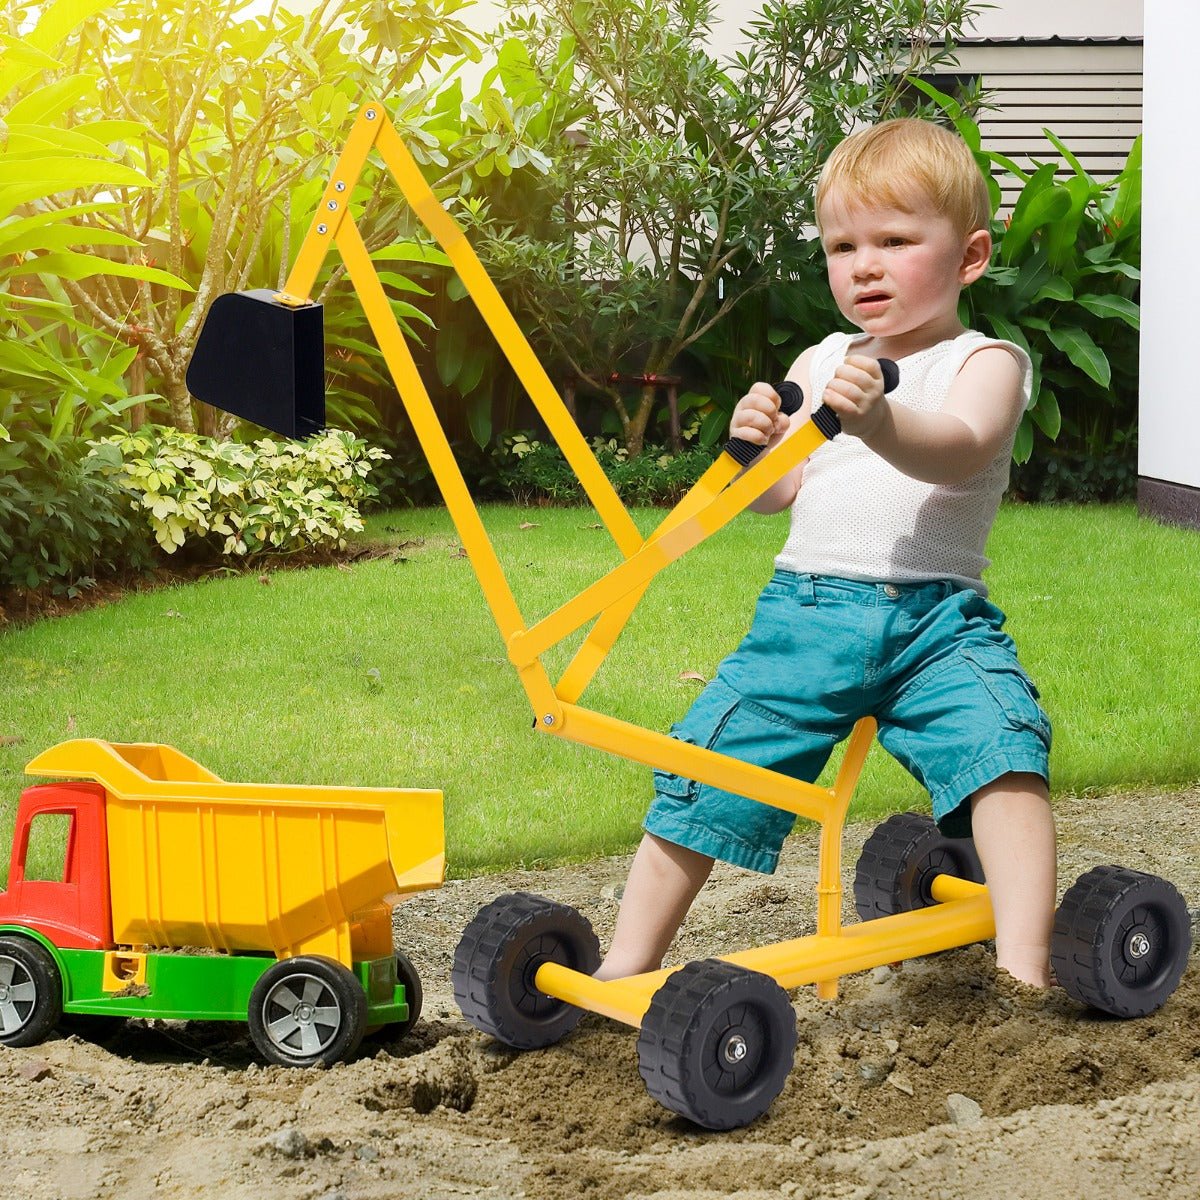 Buy the Rotatable Seat Kids Sand Digger - Beach Fun!